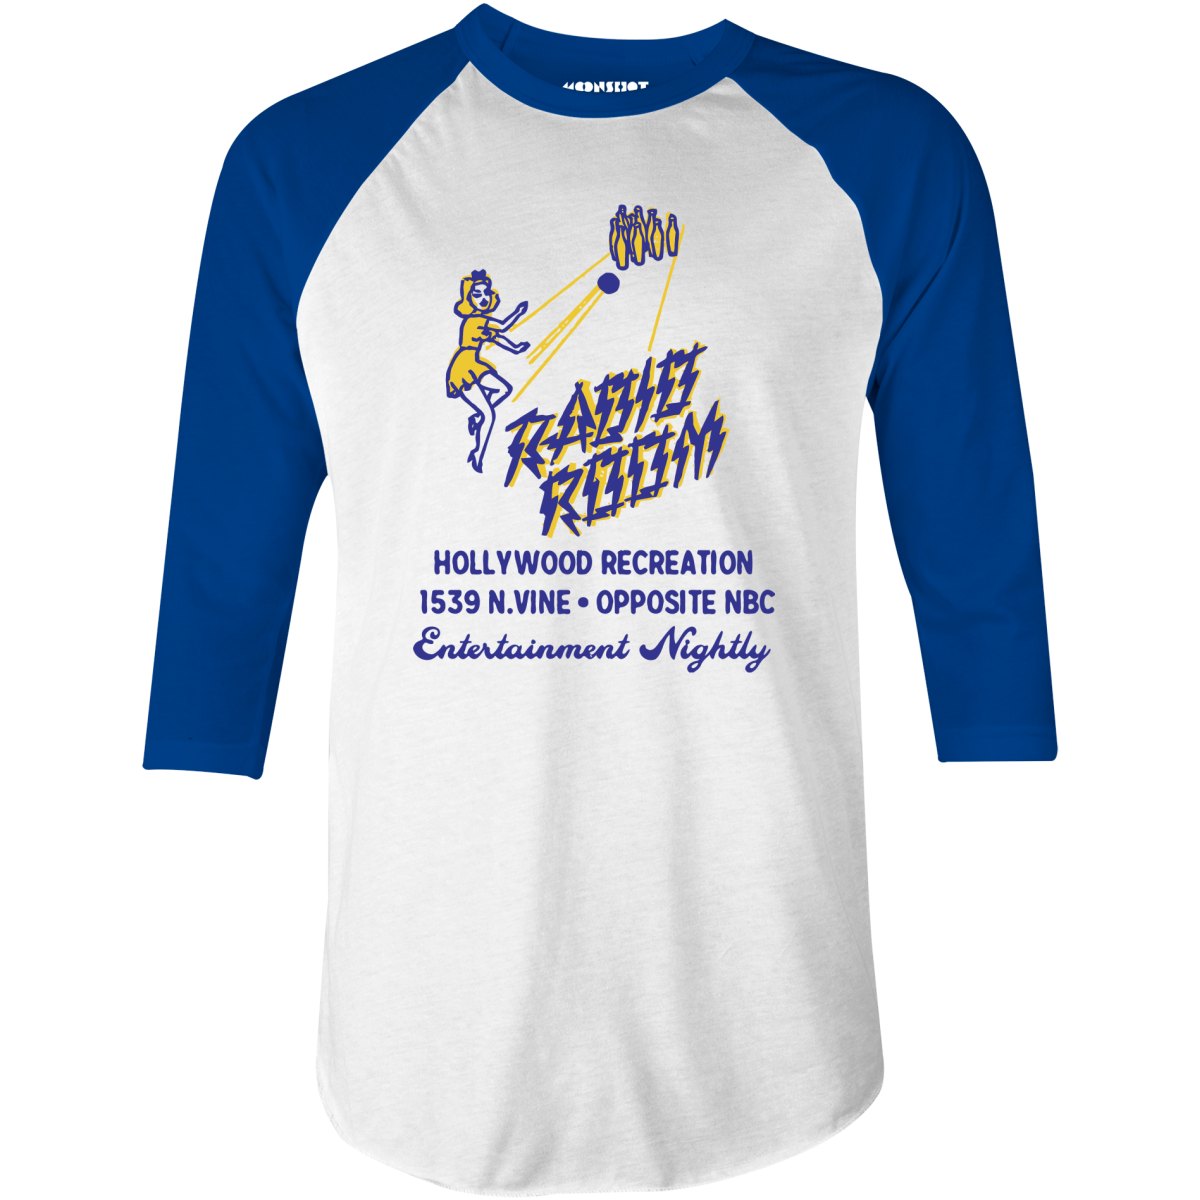 Hollywood Recreation Center - Hollywood, CA - Vintage Bowling Alley - 3/4 Sleeve Raglan T-Shirt